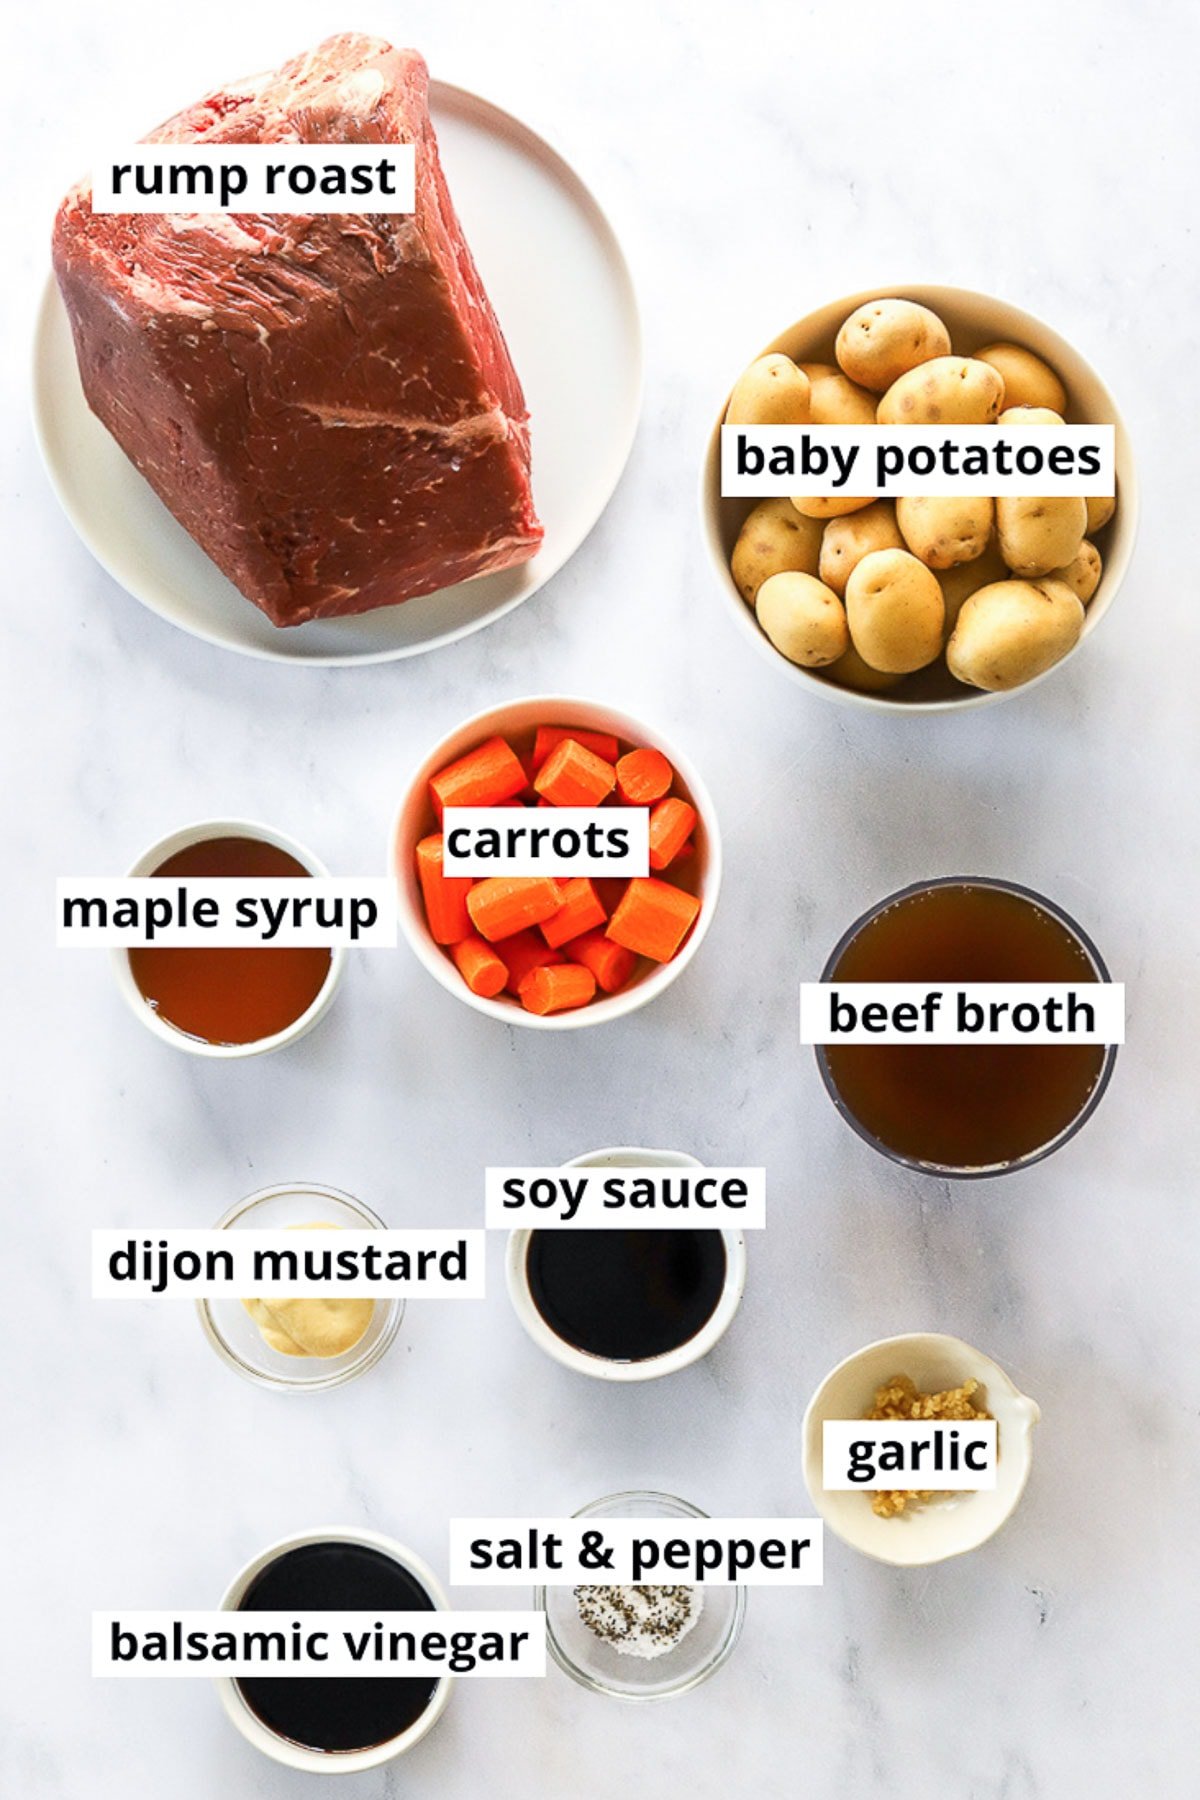 Rump roast, baby potatoes, carrots, maple syrup, beef broth, soy sauce, dijon mustard, balsamic vinegar, garlic, salt and pepper.